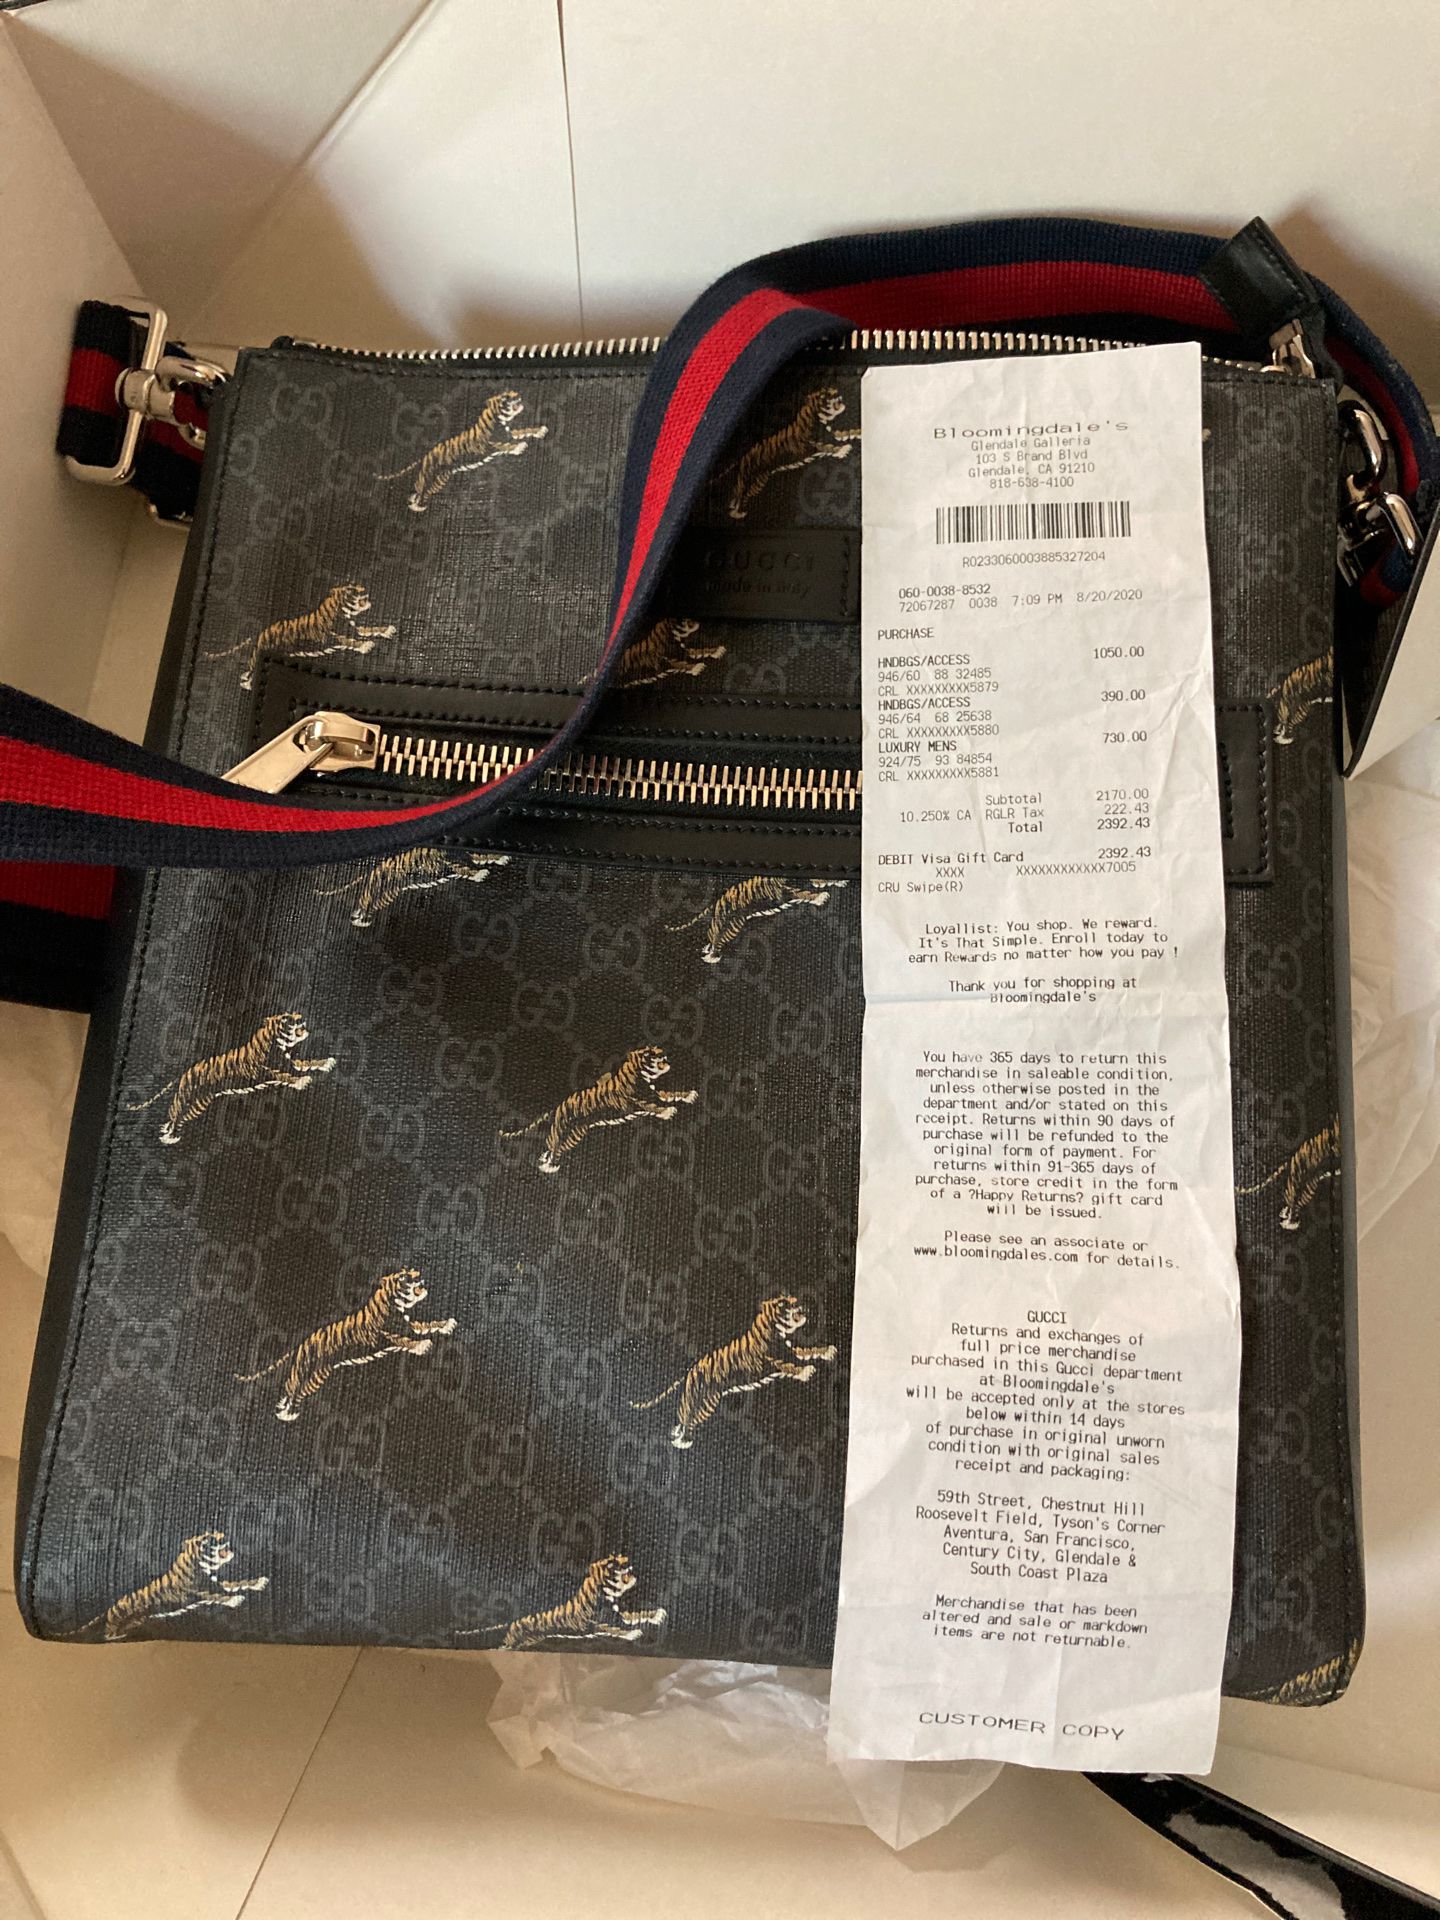 Gucci messenger bag $600